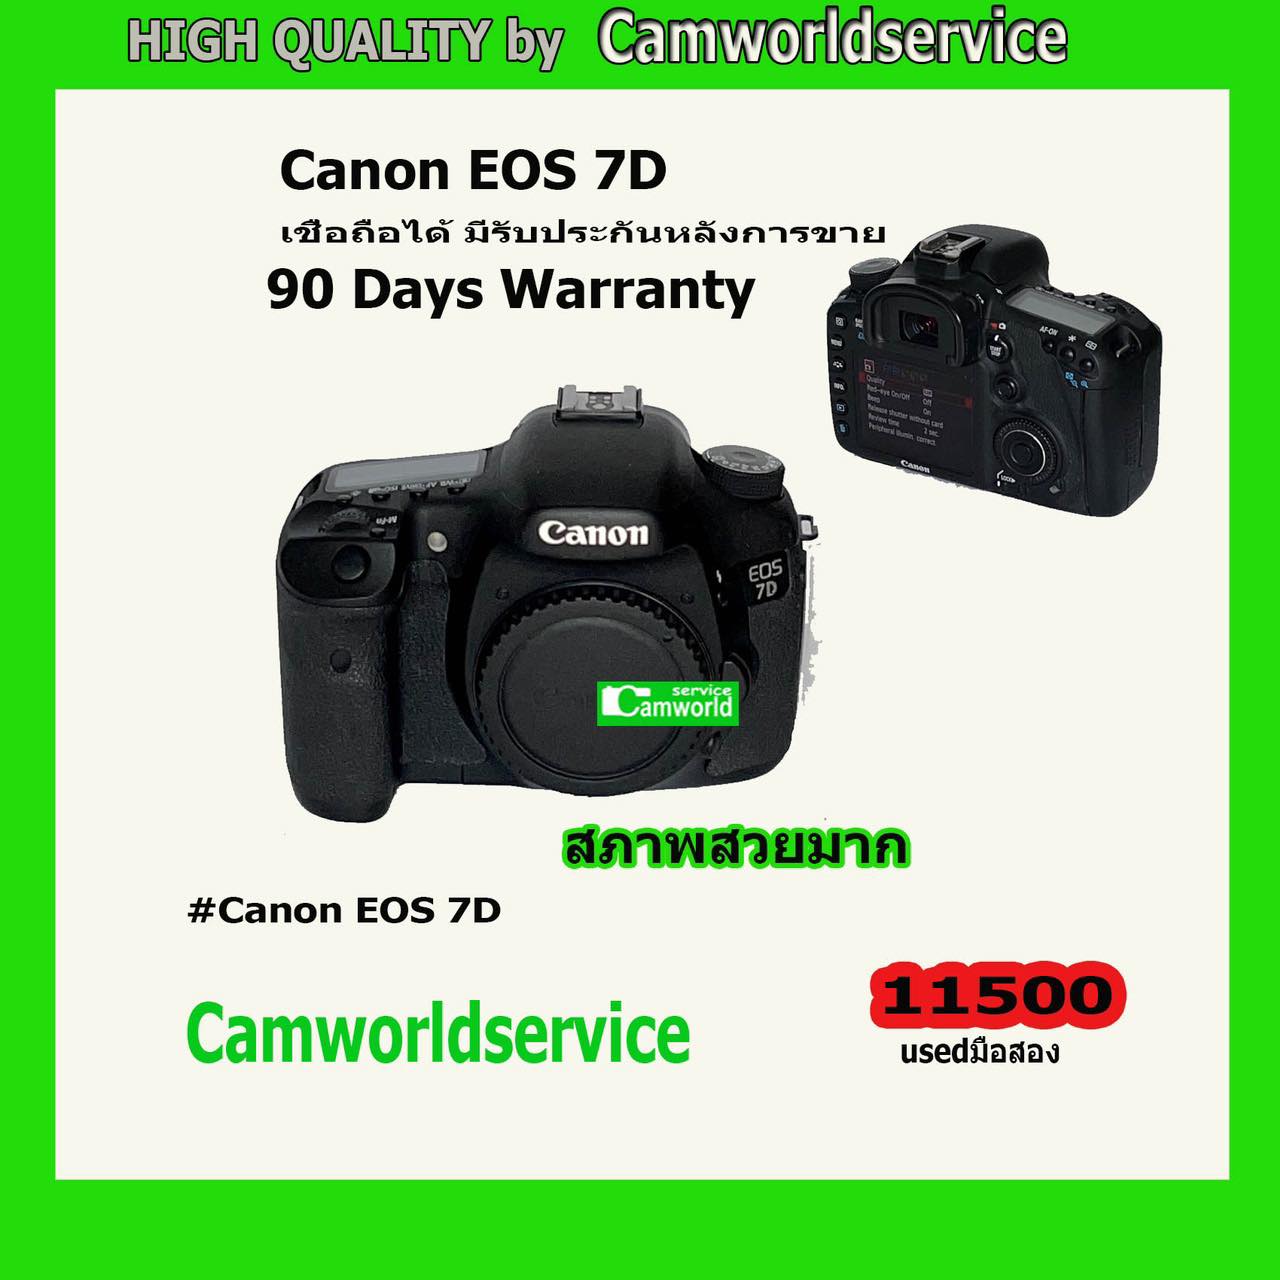 Canon EOS 7D Body - มือสอง สภาพดี เชื่อถือได้ มีรับประกันคุณภาพ 90 วัน